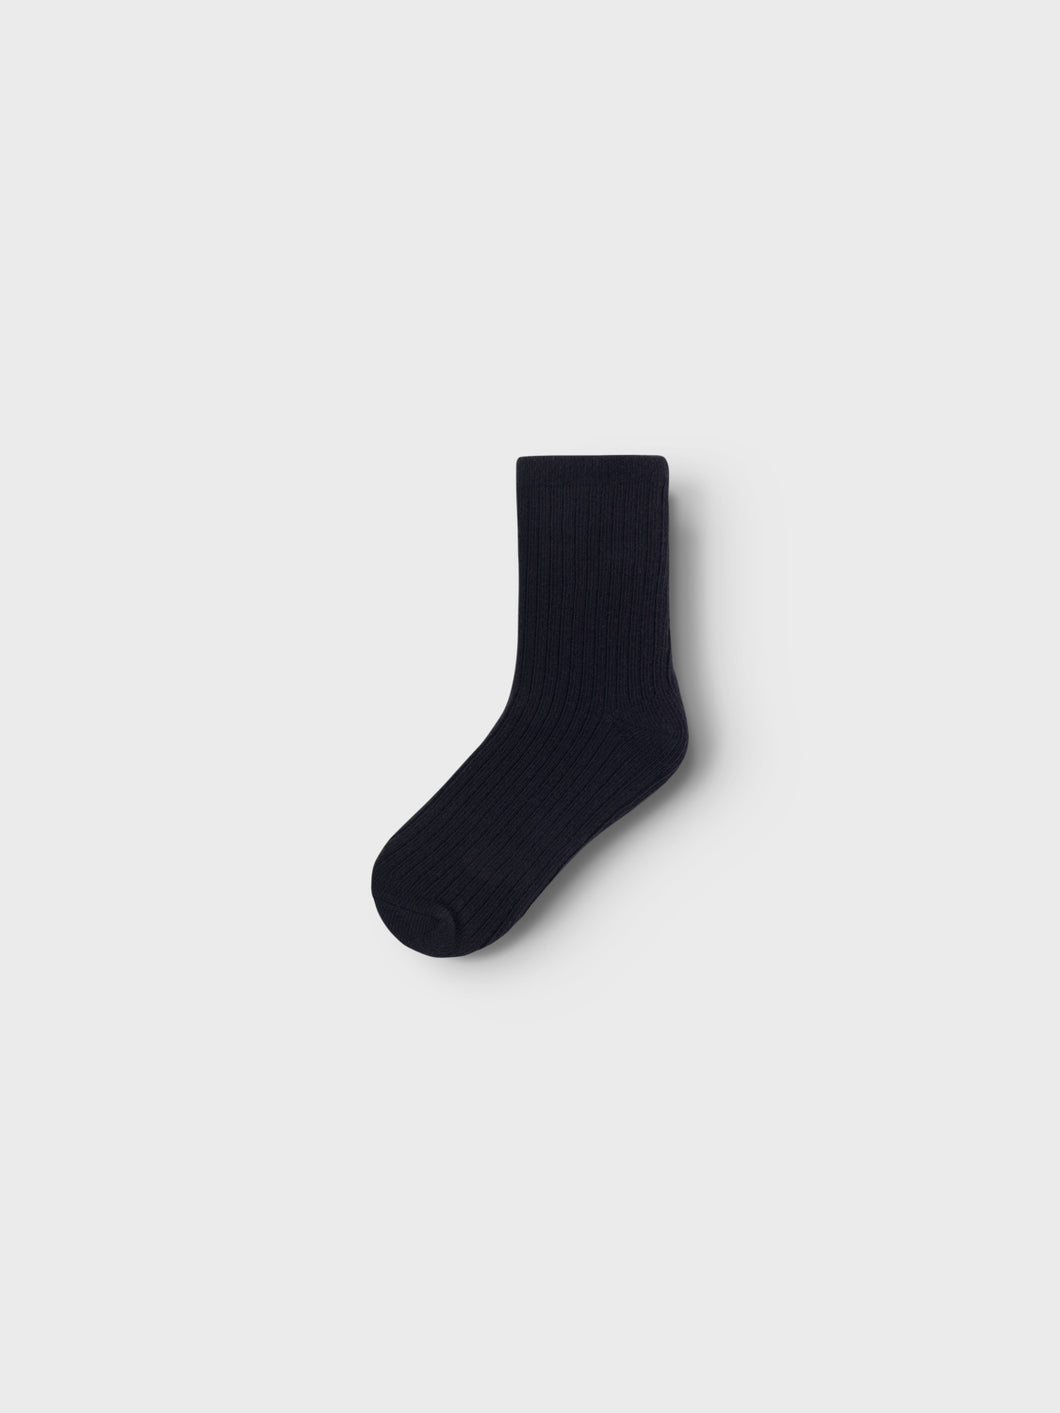 NMMNONASE Socks - Black